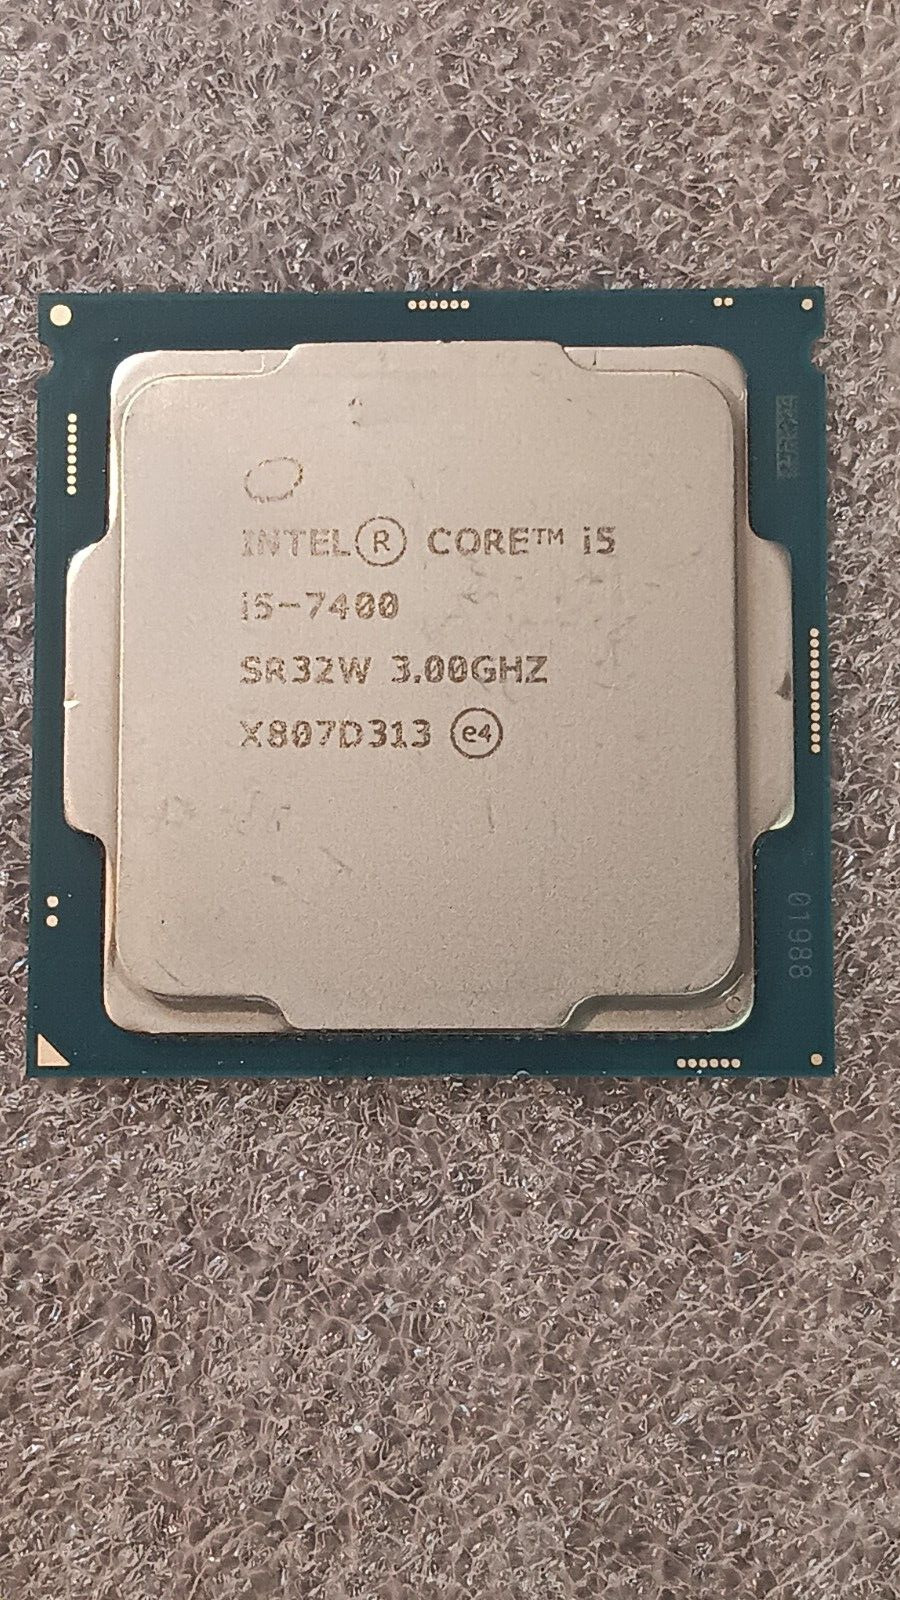 Intel Core I5-7400 3.0GHz 6M Cache Quad Core Socket 1151 CPU (SR32W)